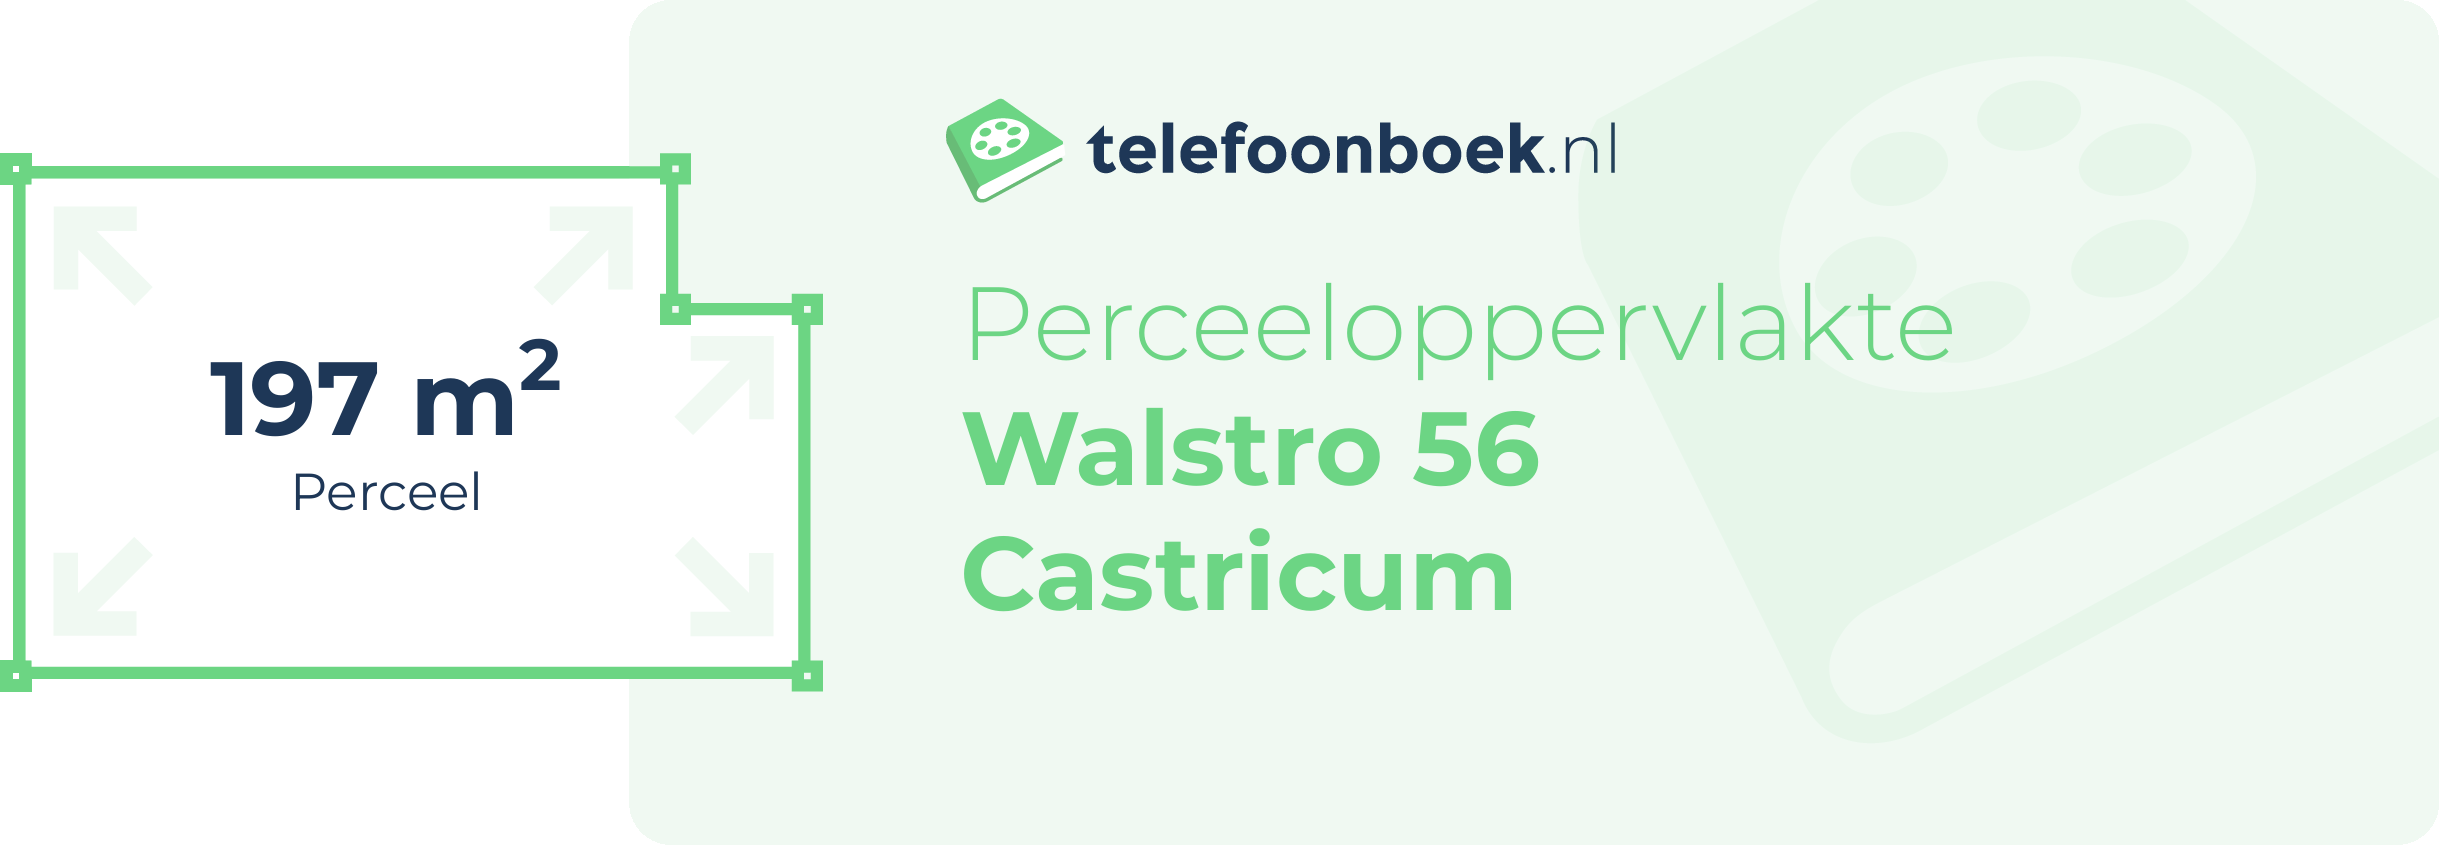 Perceeloppervlakte Walstro 56 Castricum